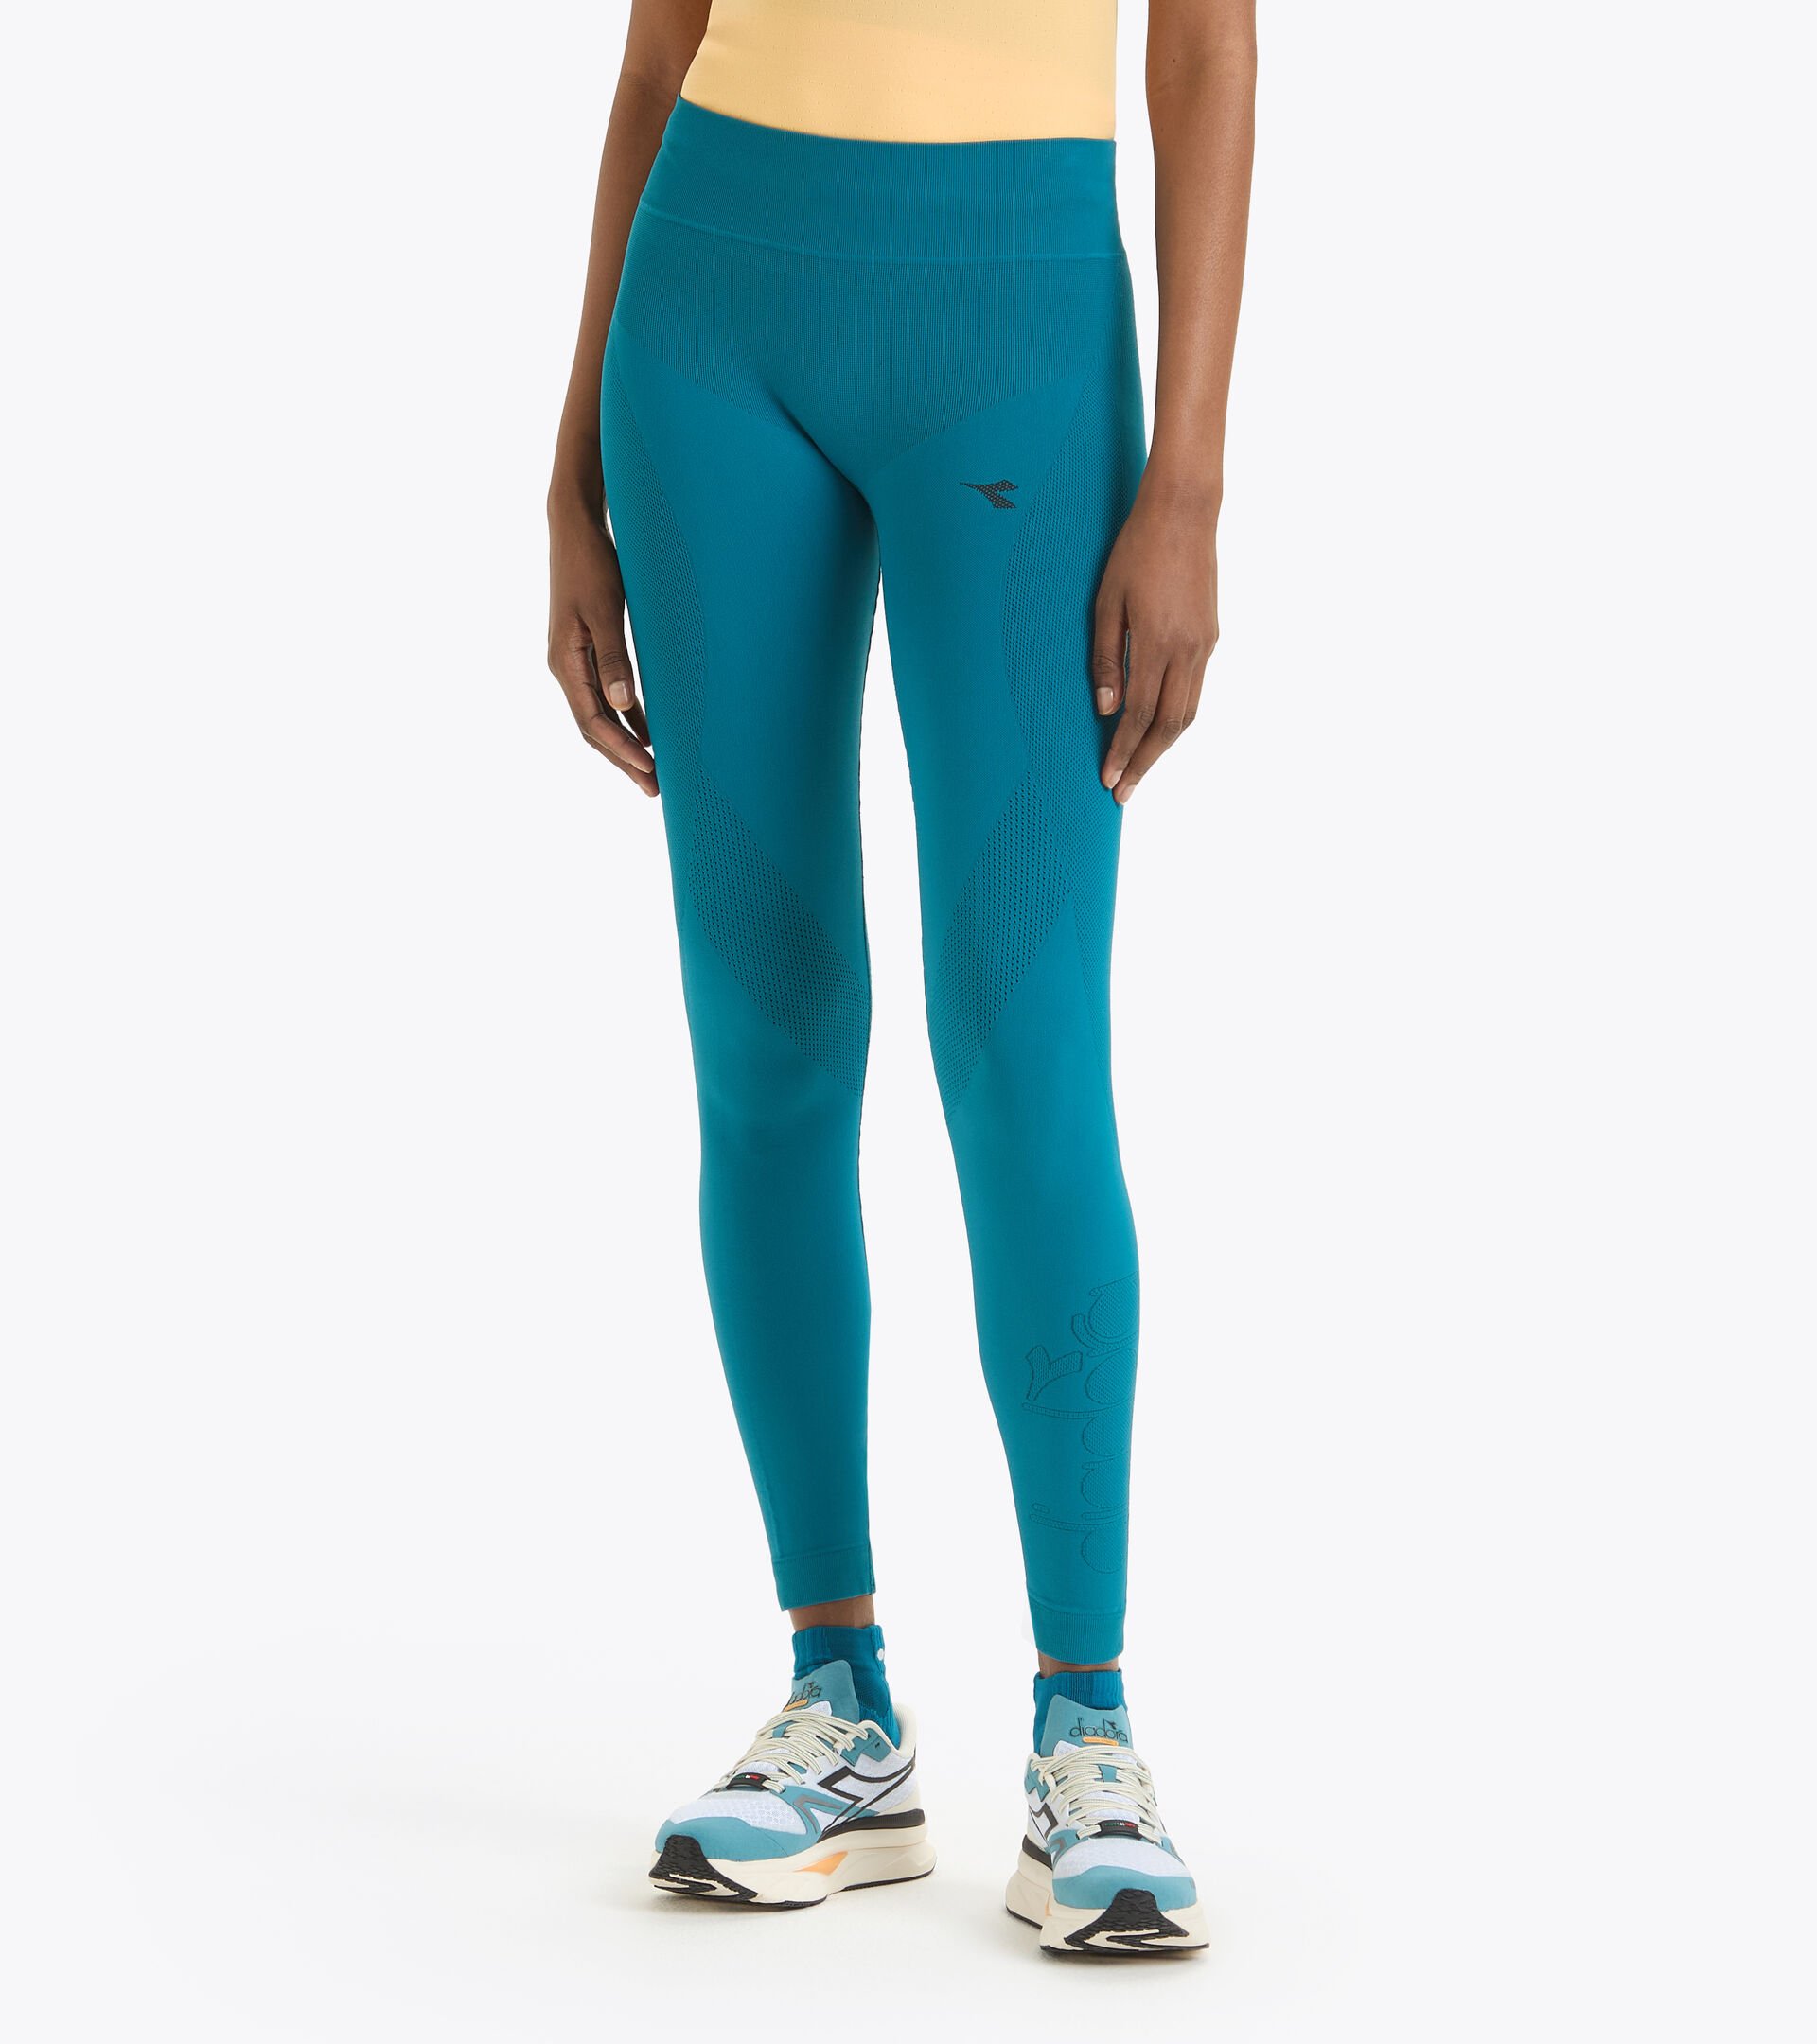 L. TIGHTS SKIN FRIENDLY Running leggings - Women - Diadora Online Store US